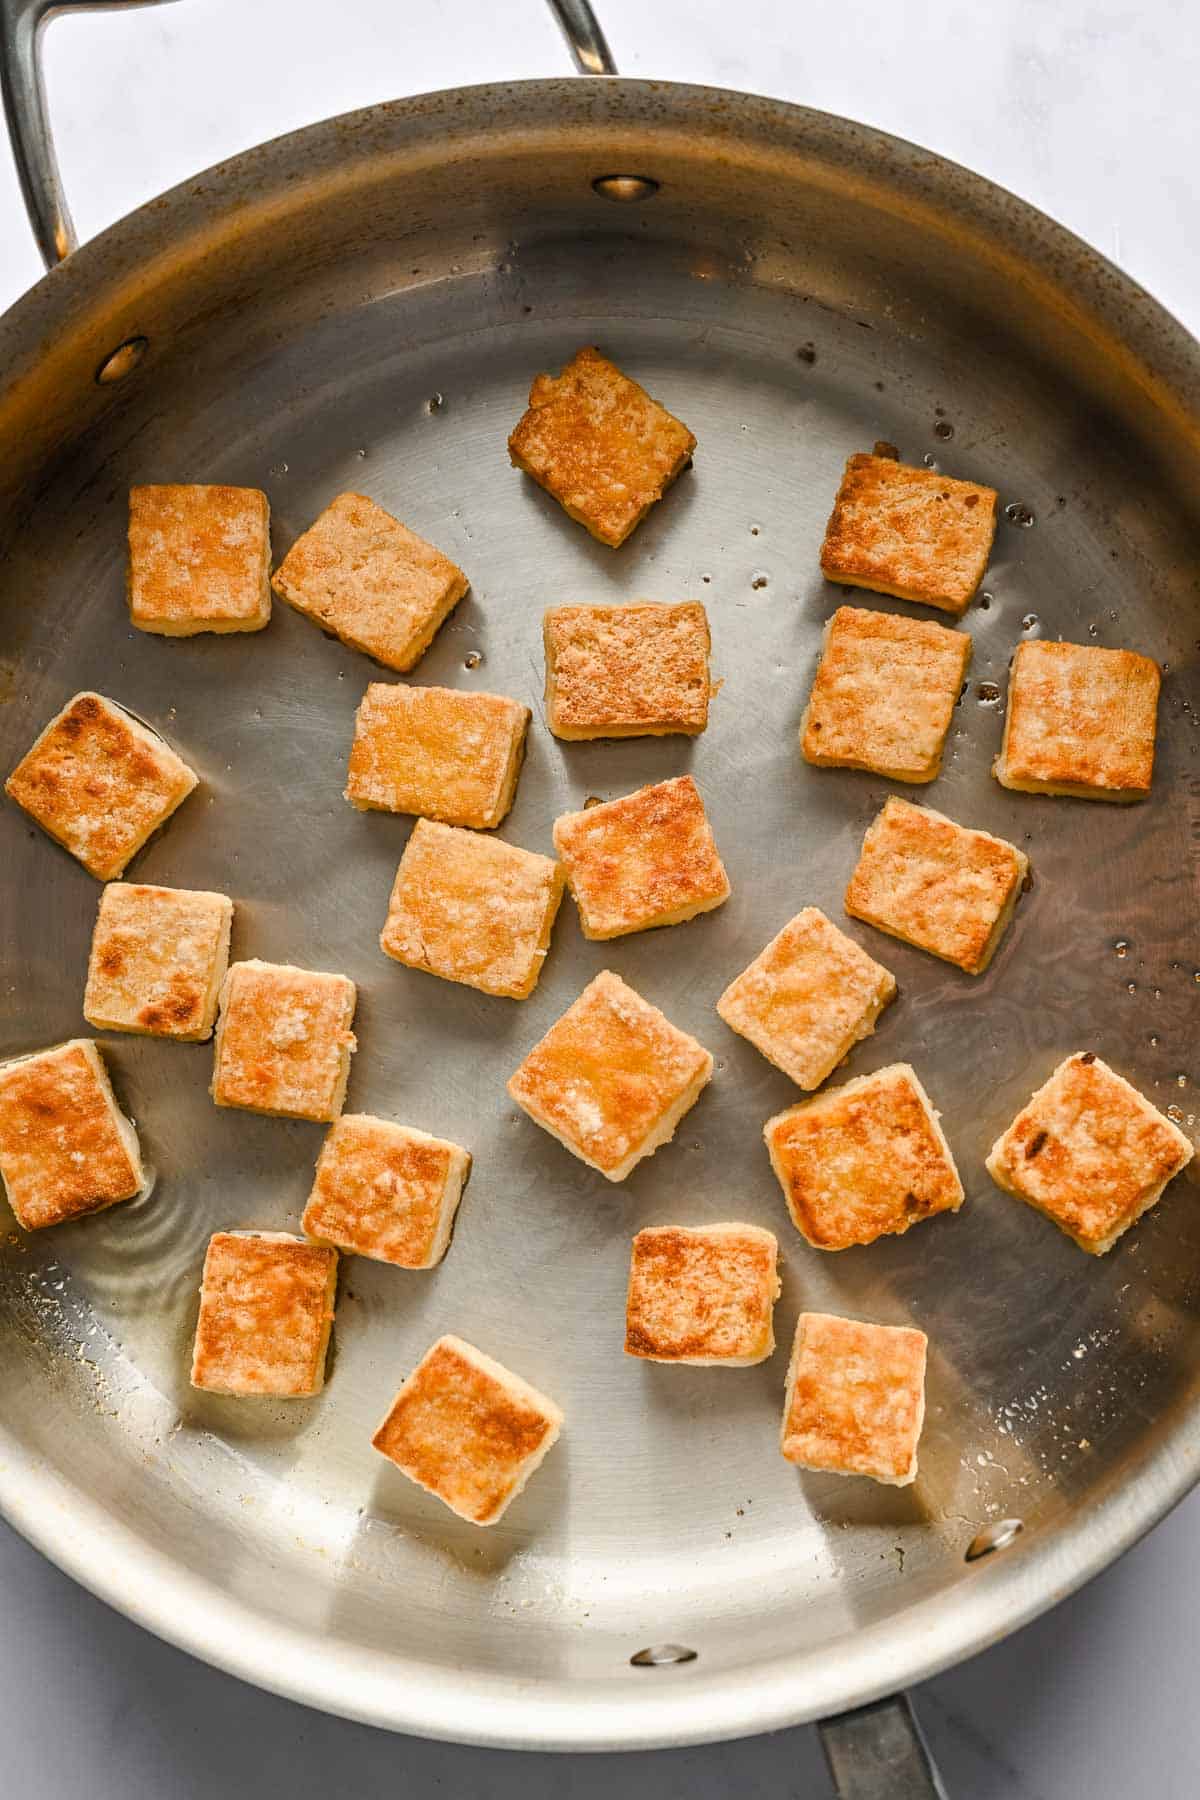 Tofu cubes frying in a metal skillet.